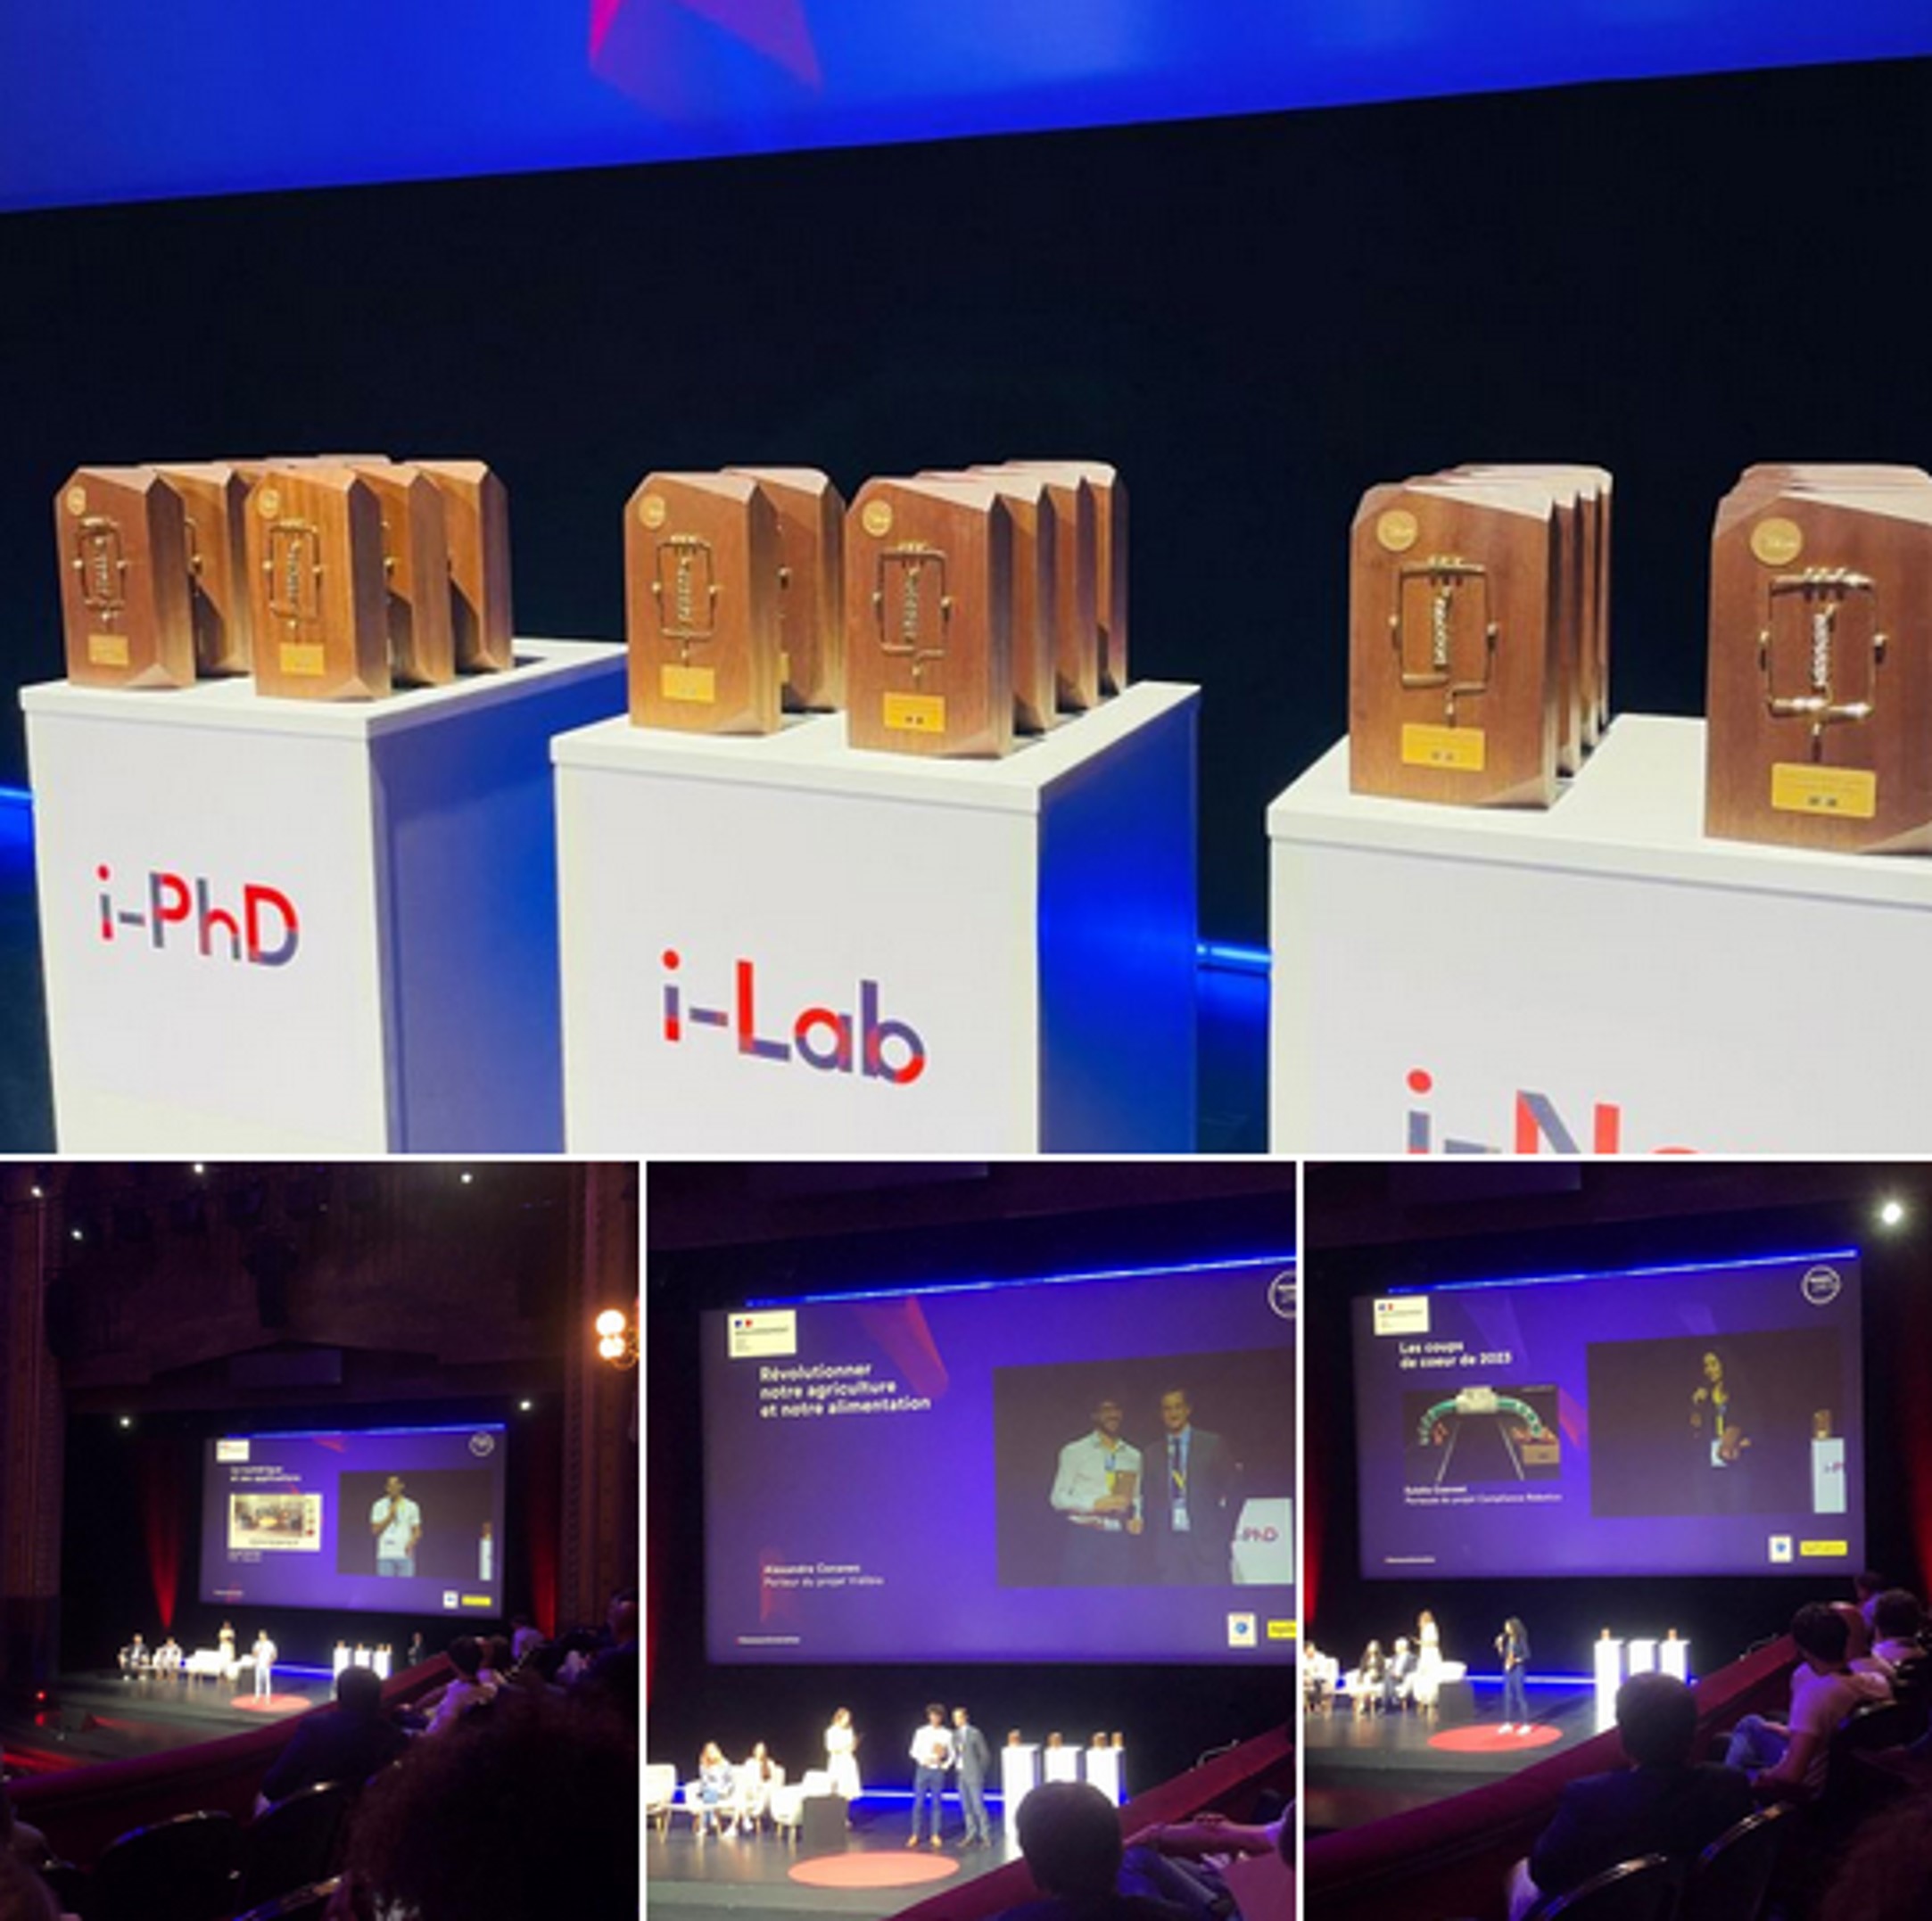 i-Lab, i-PhD, i-Nov, the BPIFrance innovation prizes and Inria